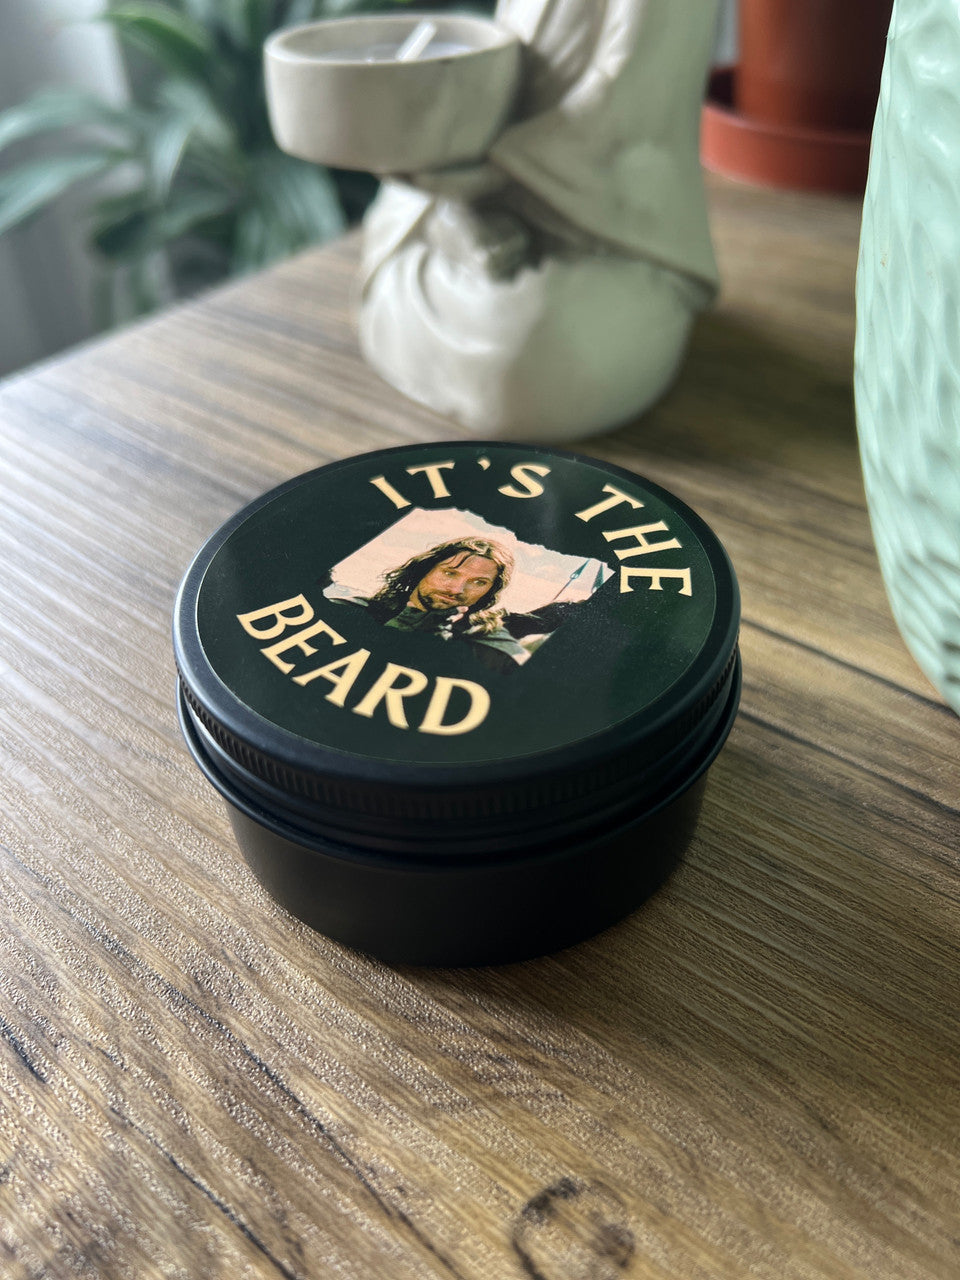 It’s The Beard - Beard Cream - Men’s Grooming - Lord of The Rings Aragorn